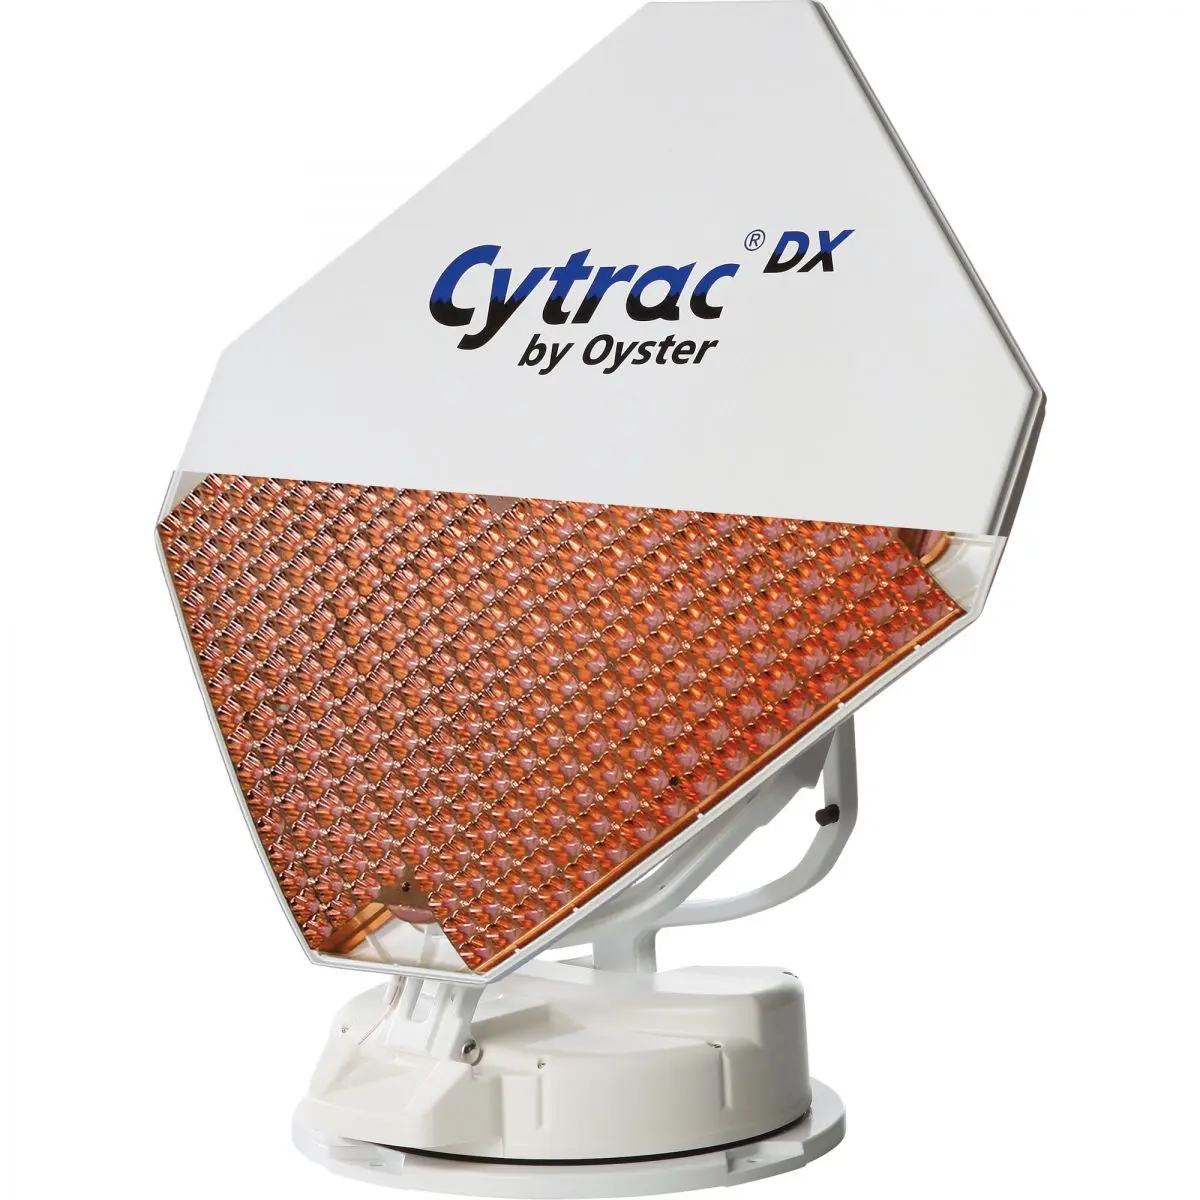 Cytrac DX Premium Base Single műholdrendszer